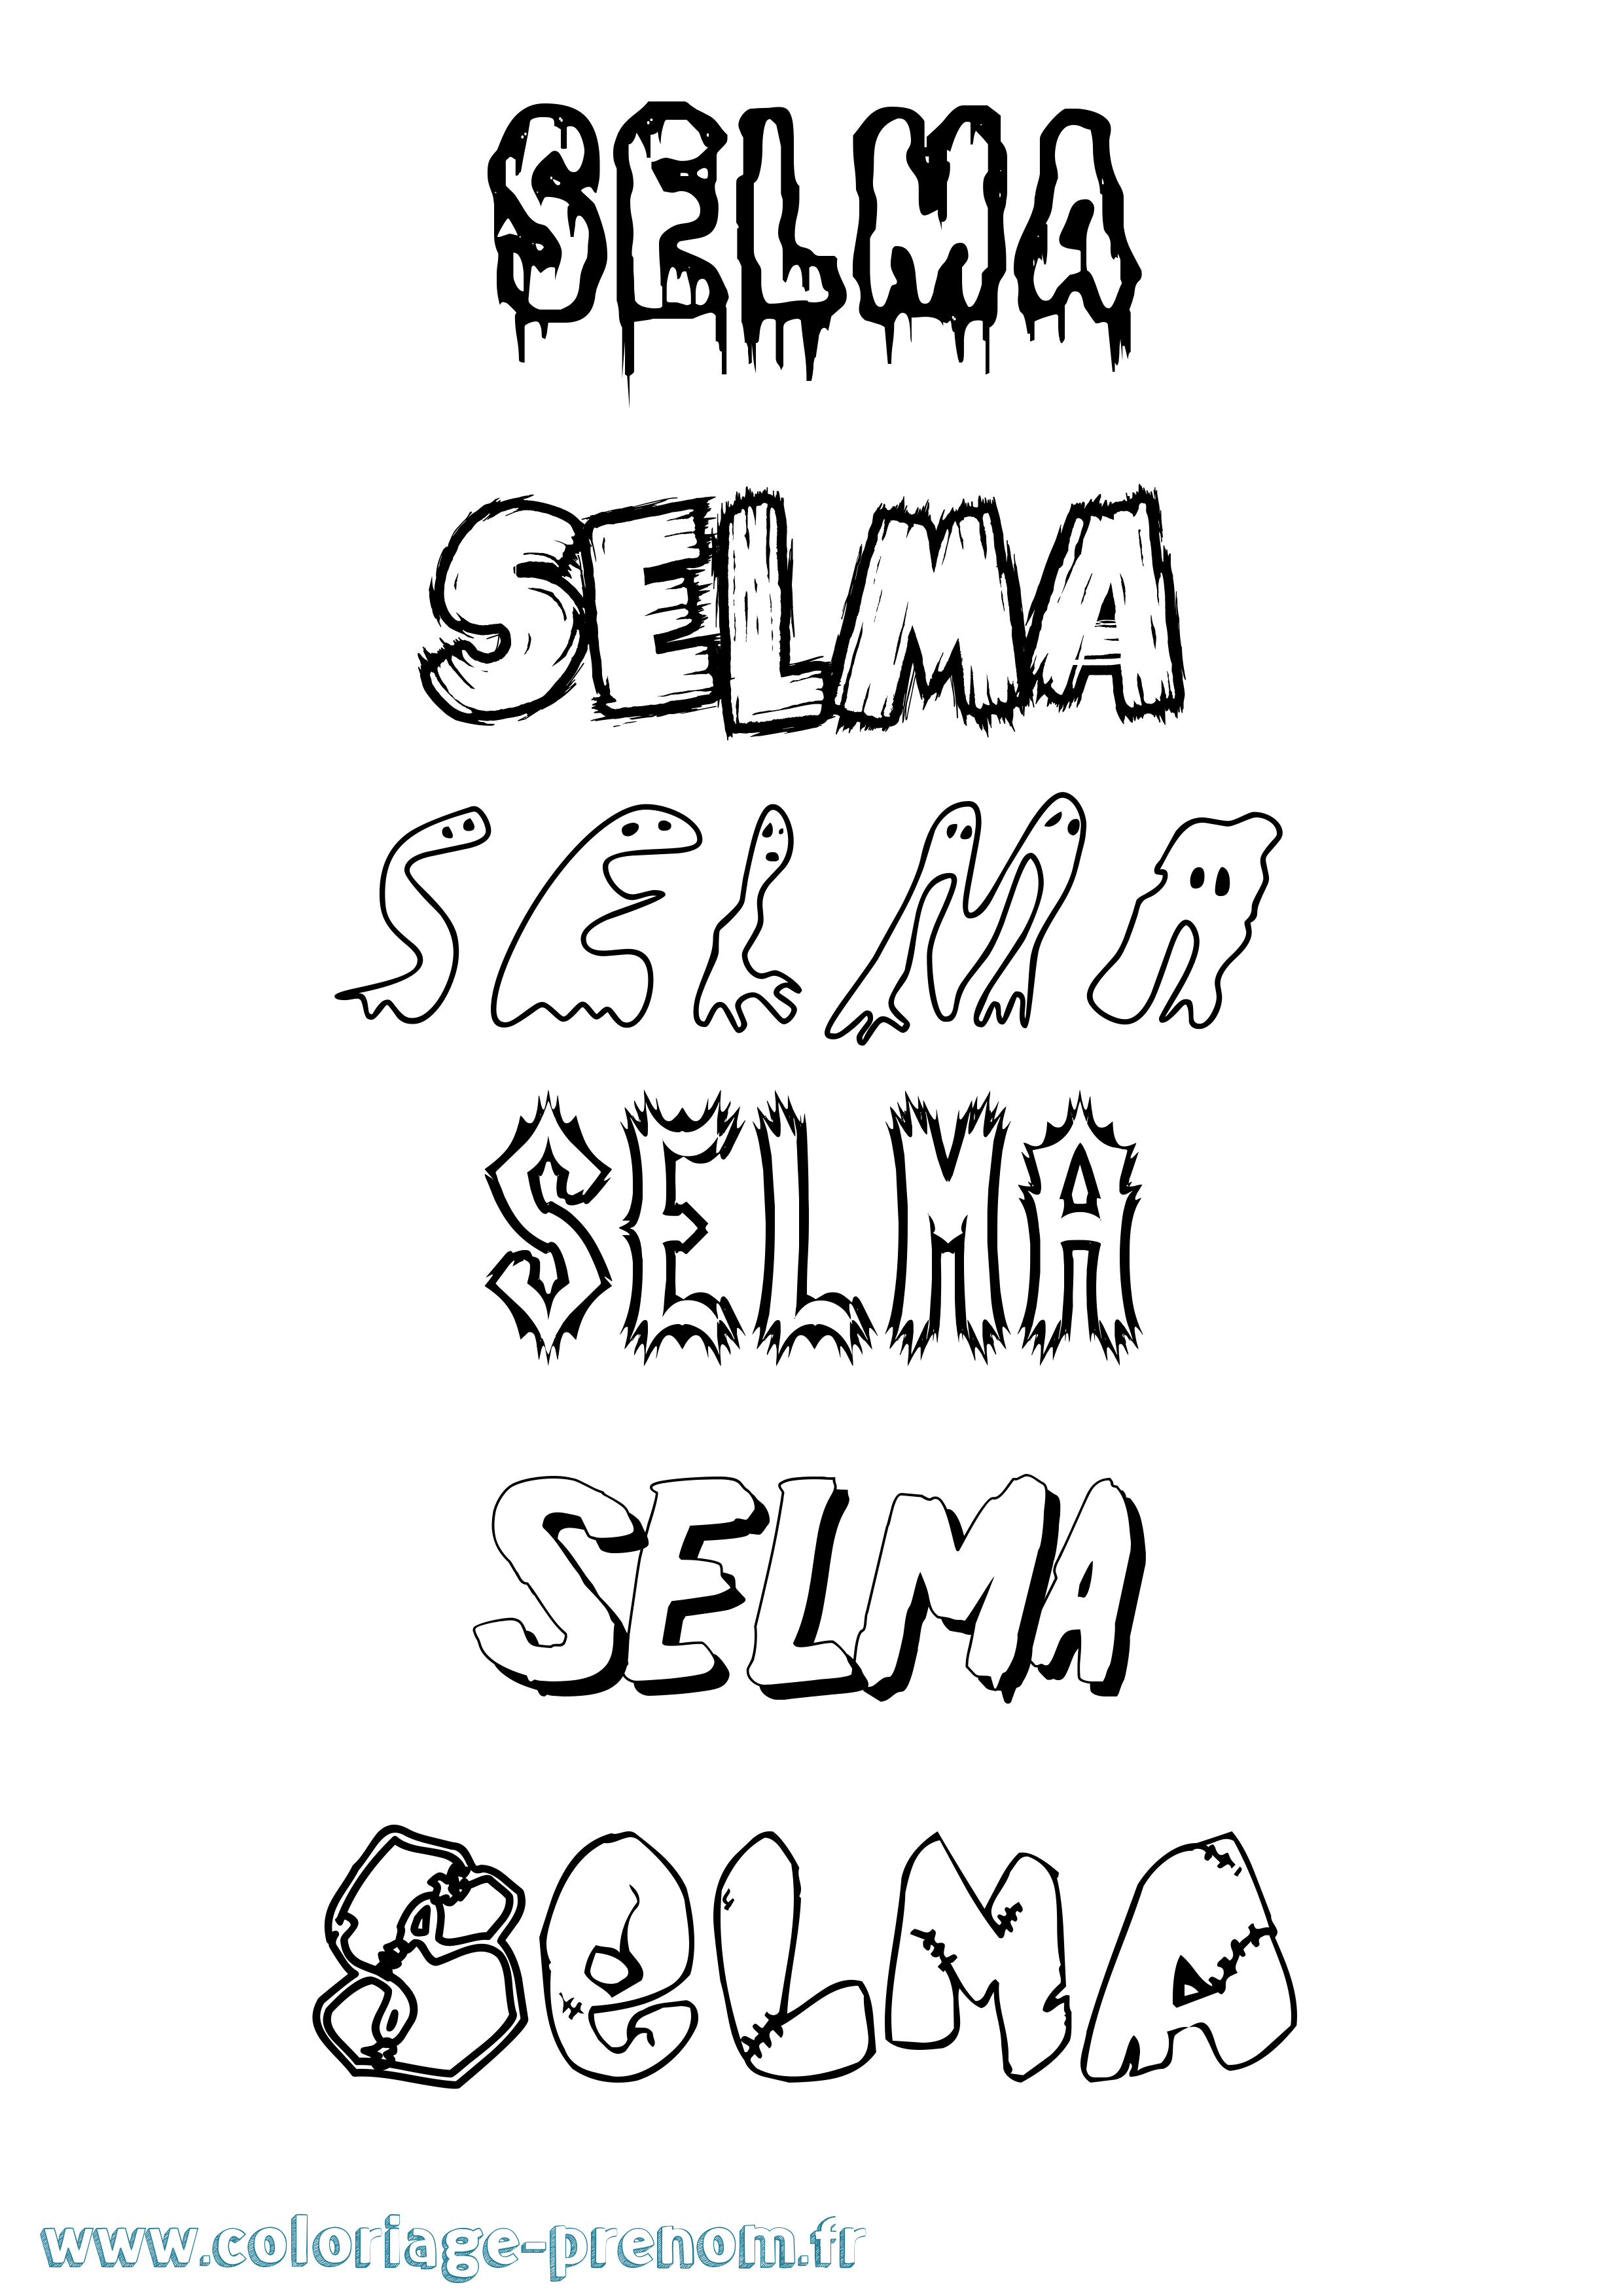 Coloriage prénom Selma